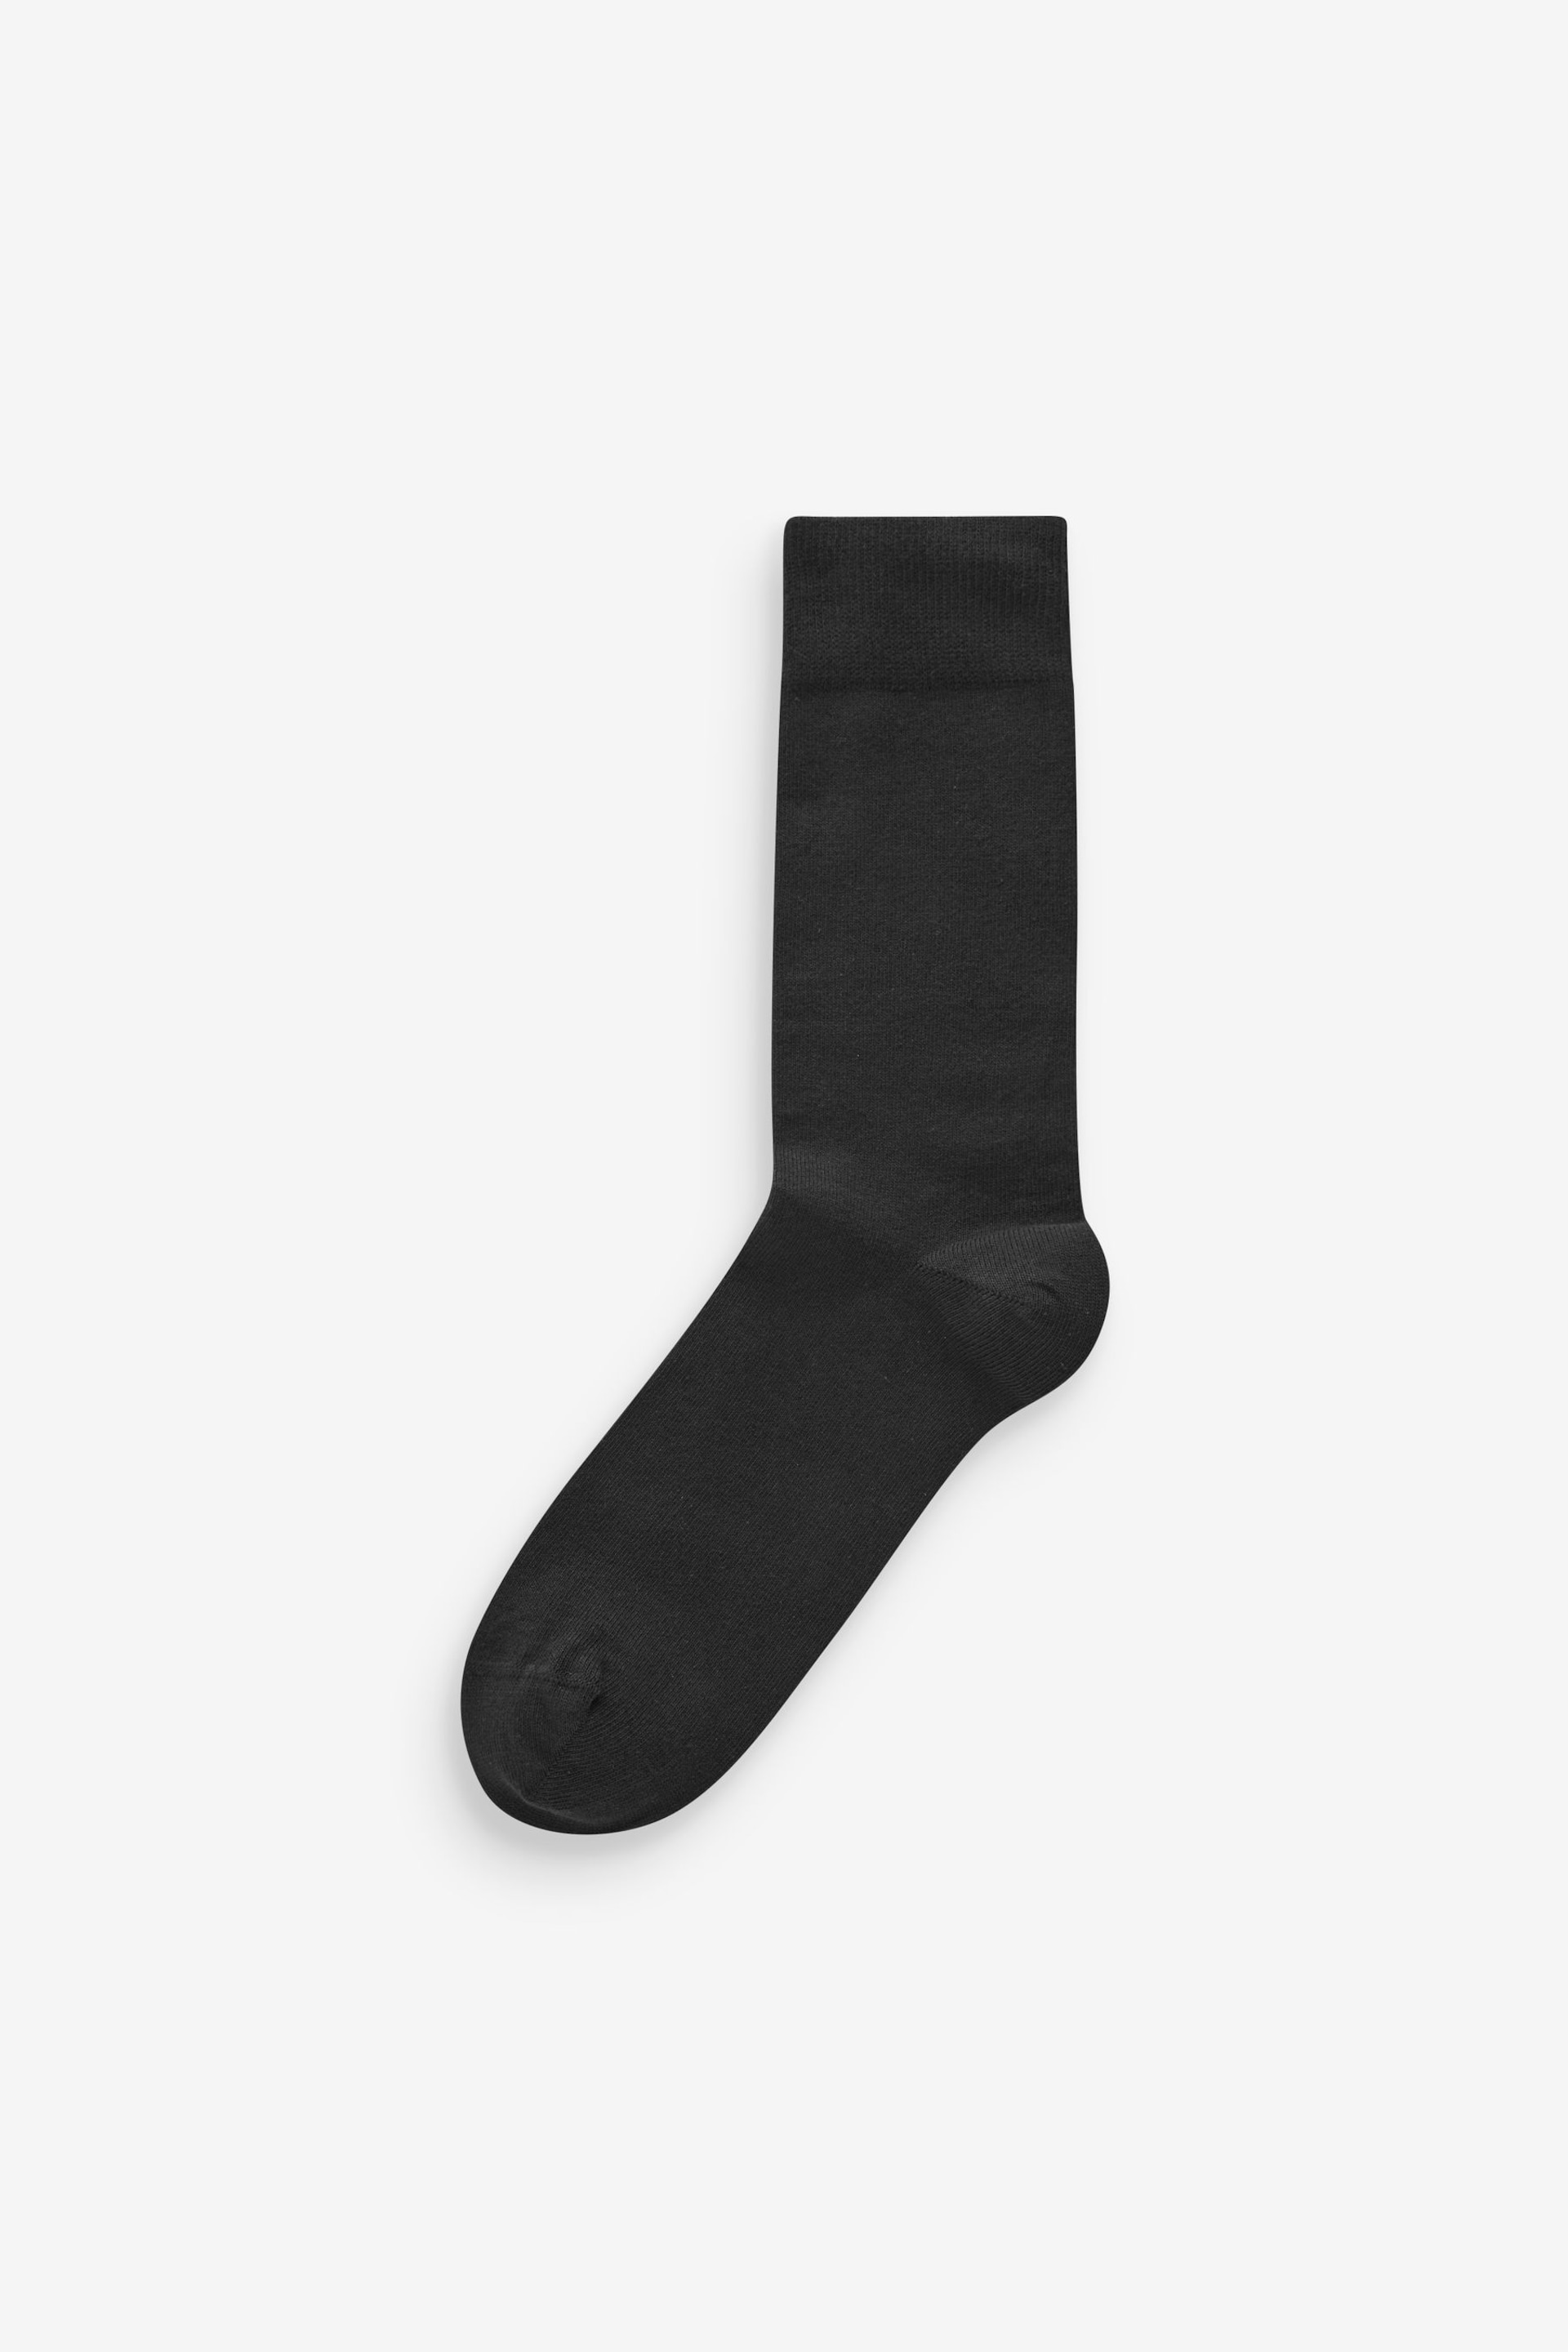 Black/Grey Pattern 7 Pack Mens Cotton Rich Socks - Image 4 of 10